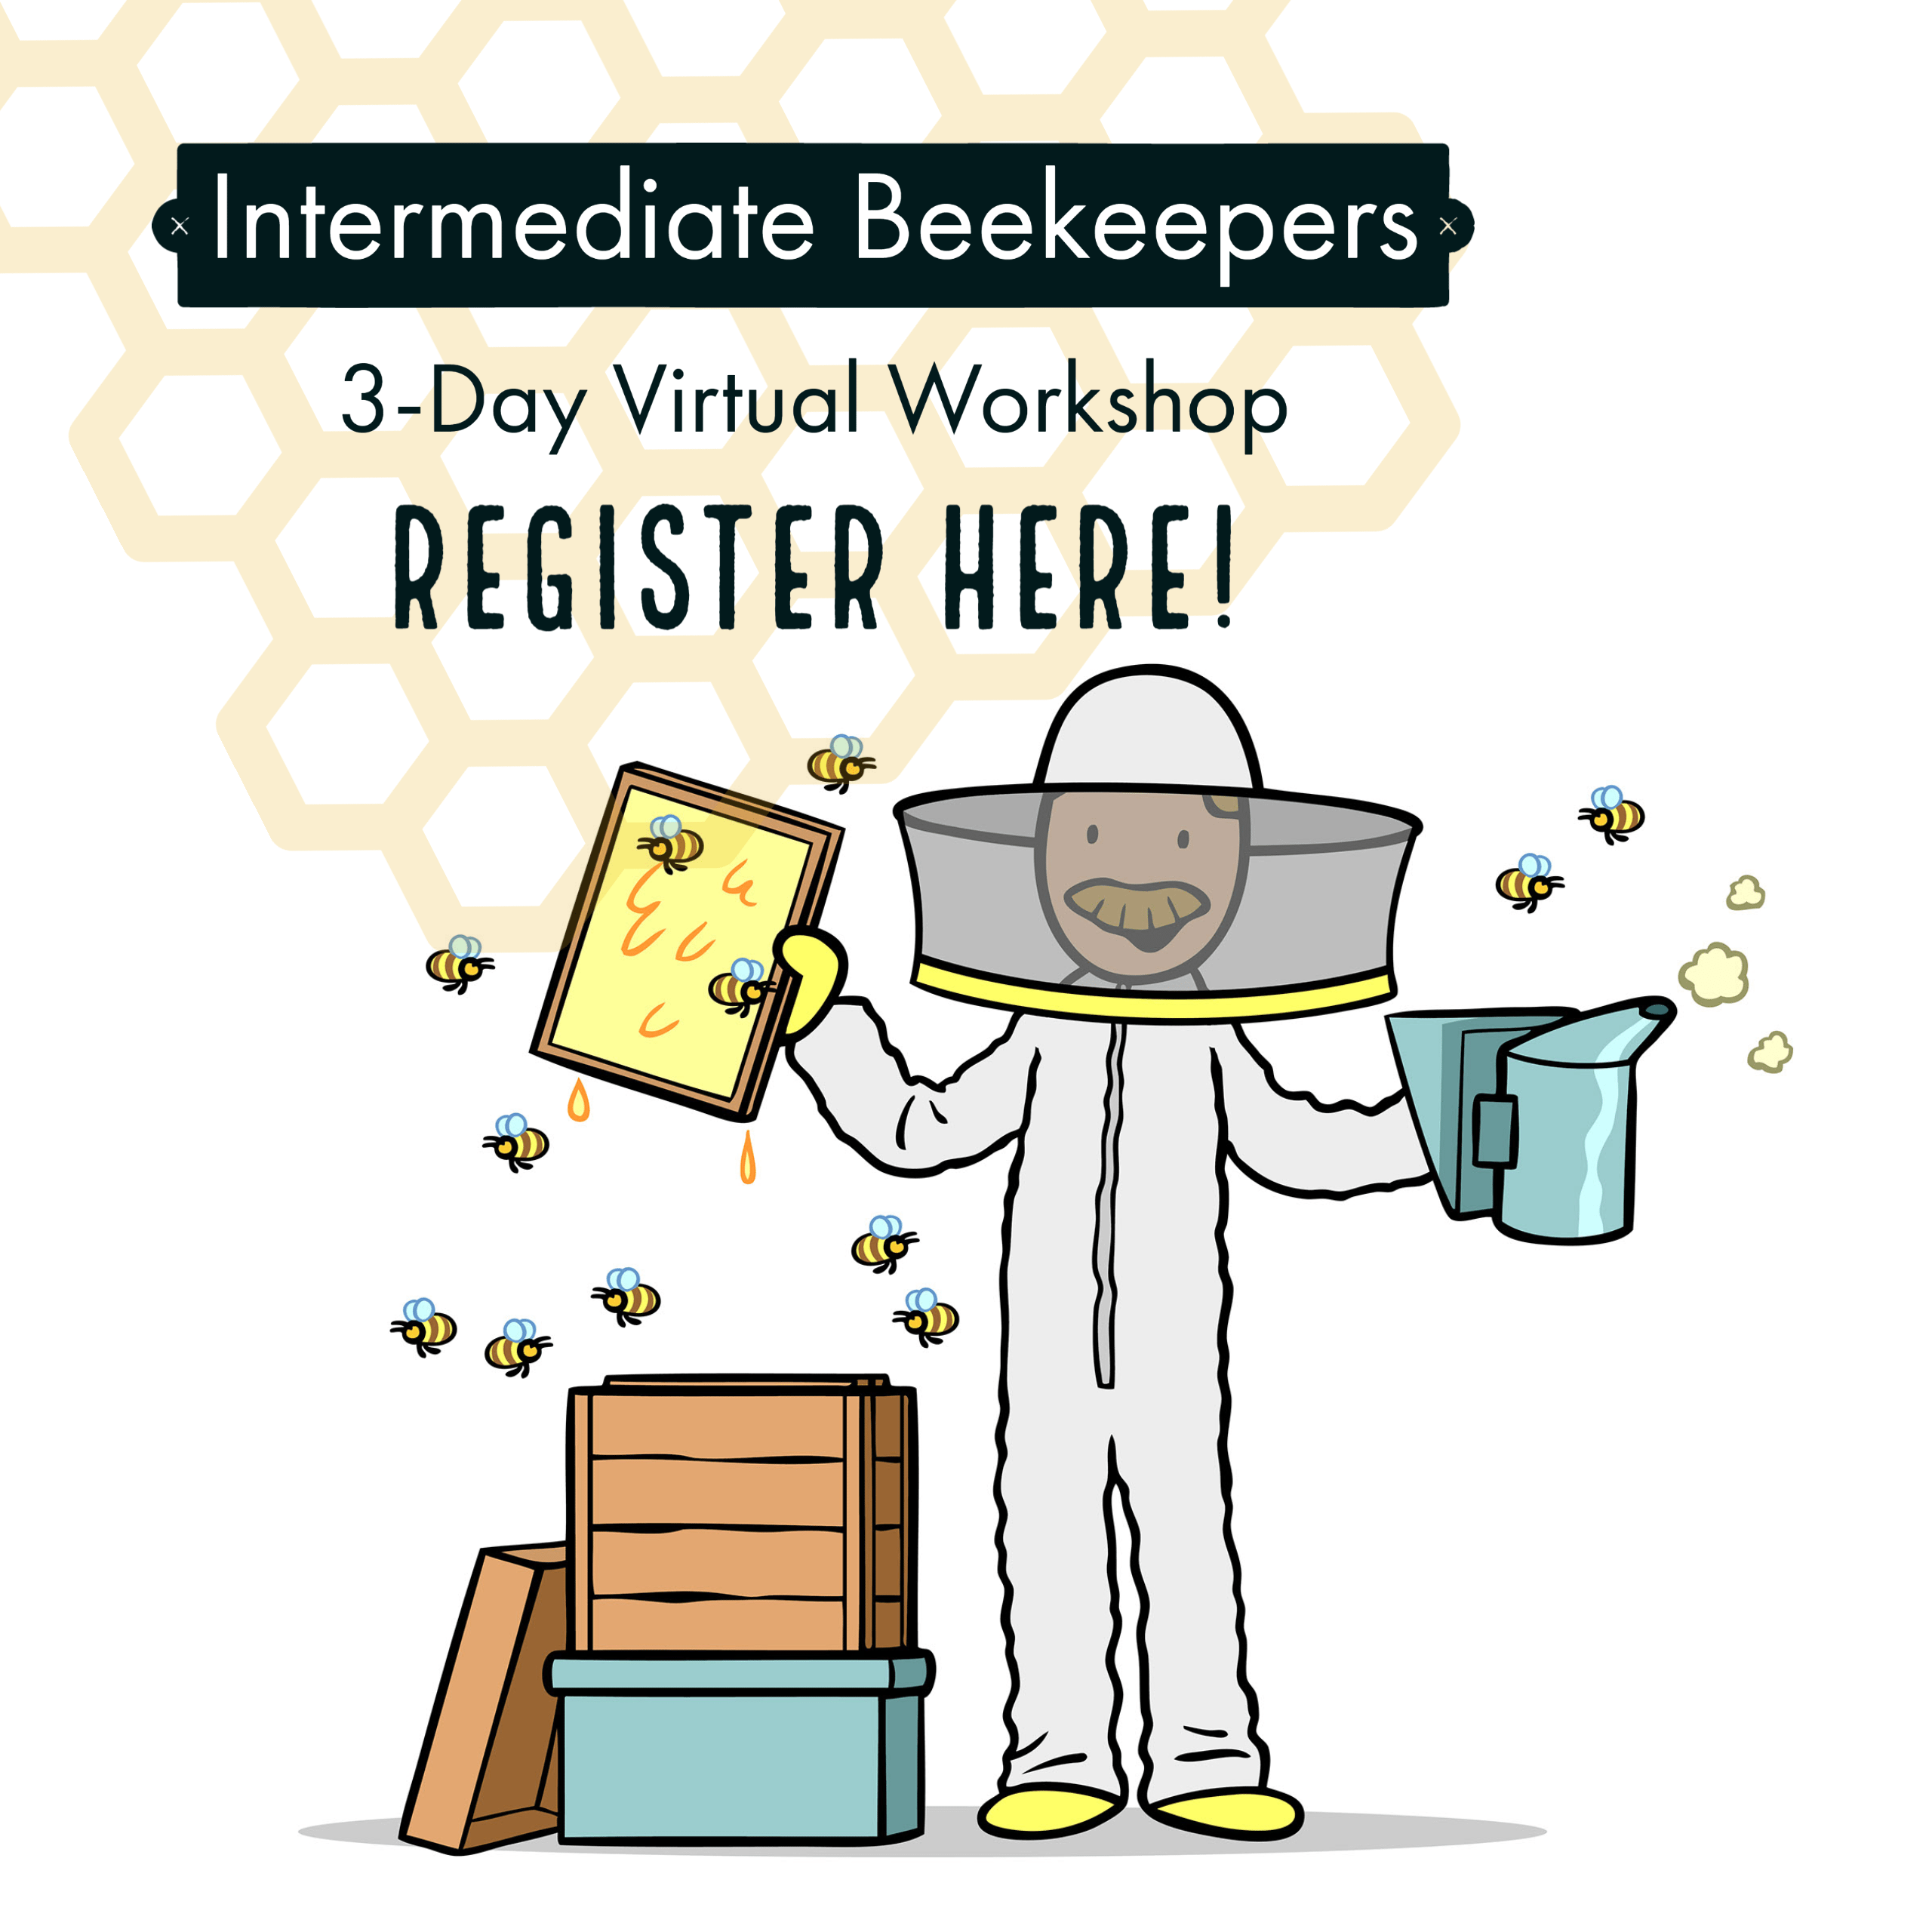 cartoon beekeeper with intermediate beekeeper workshop information